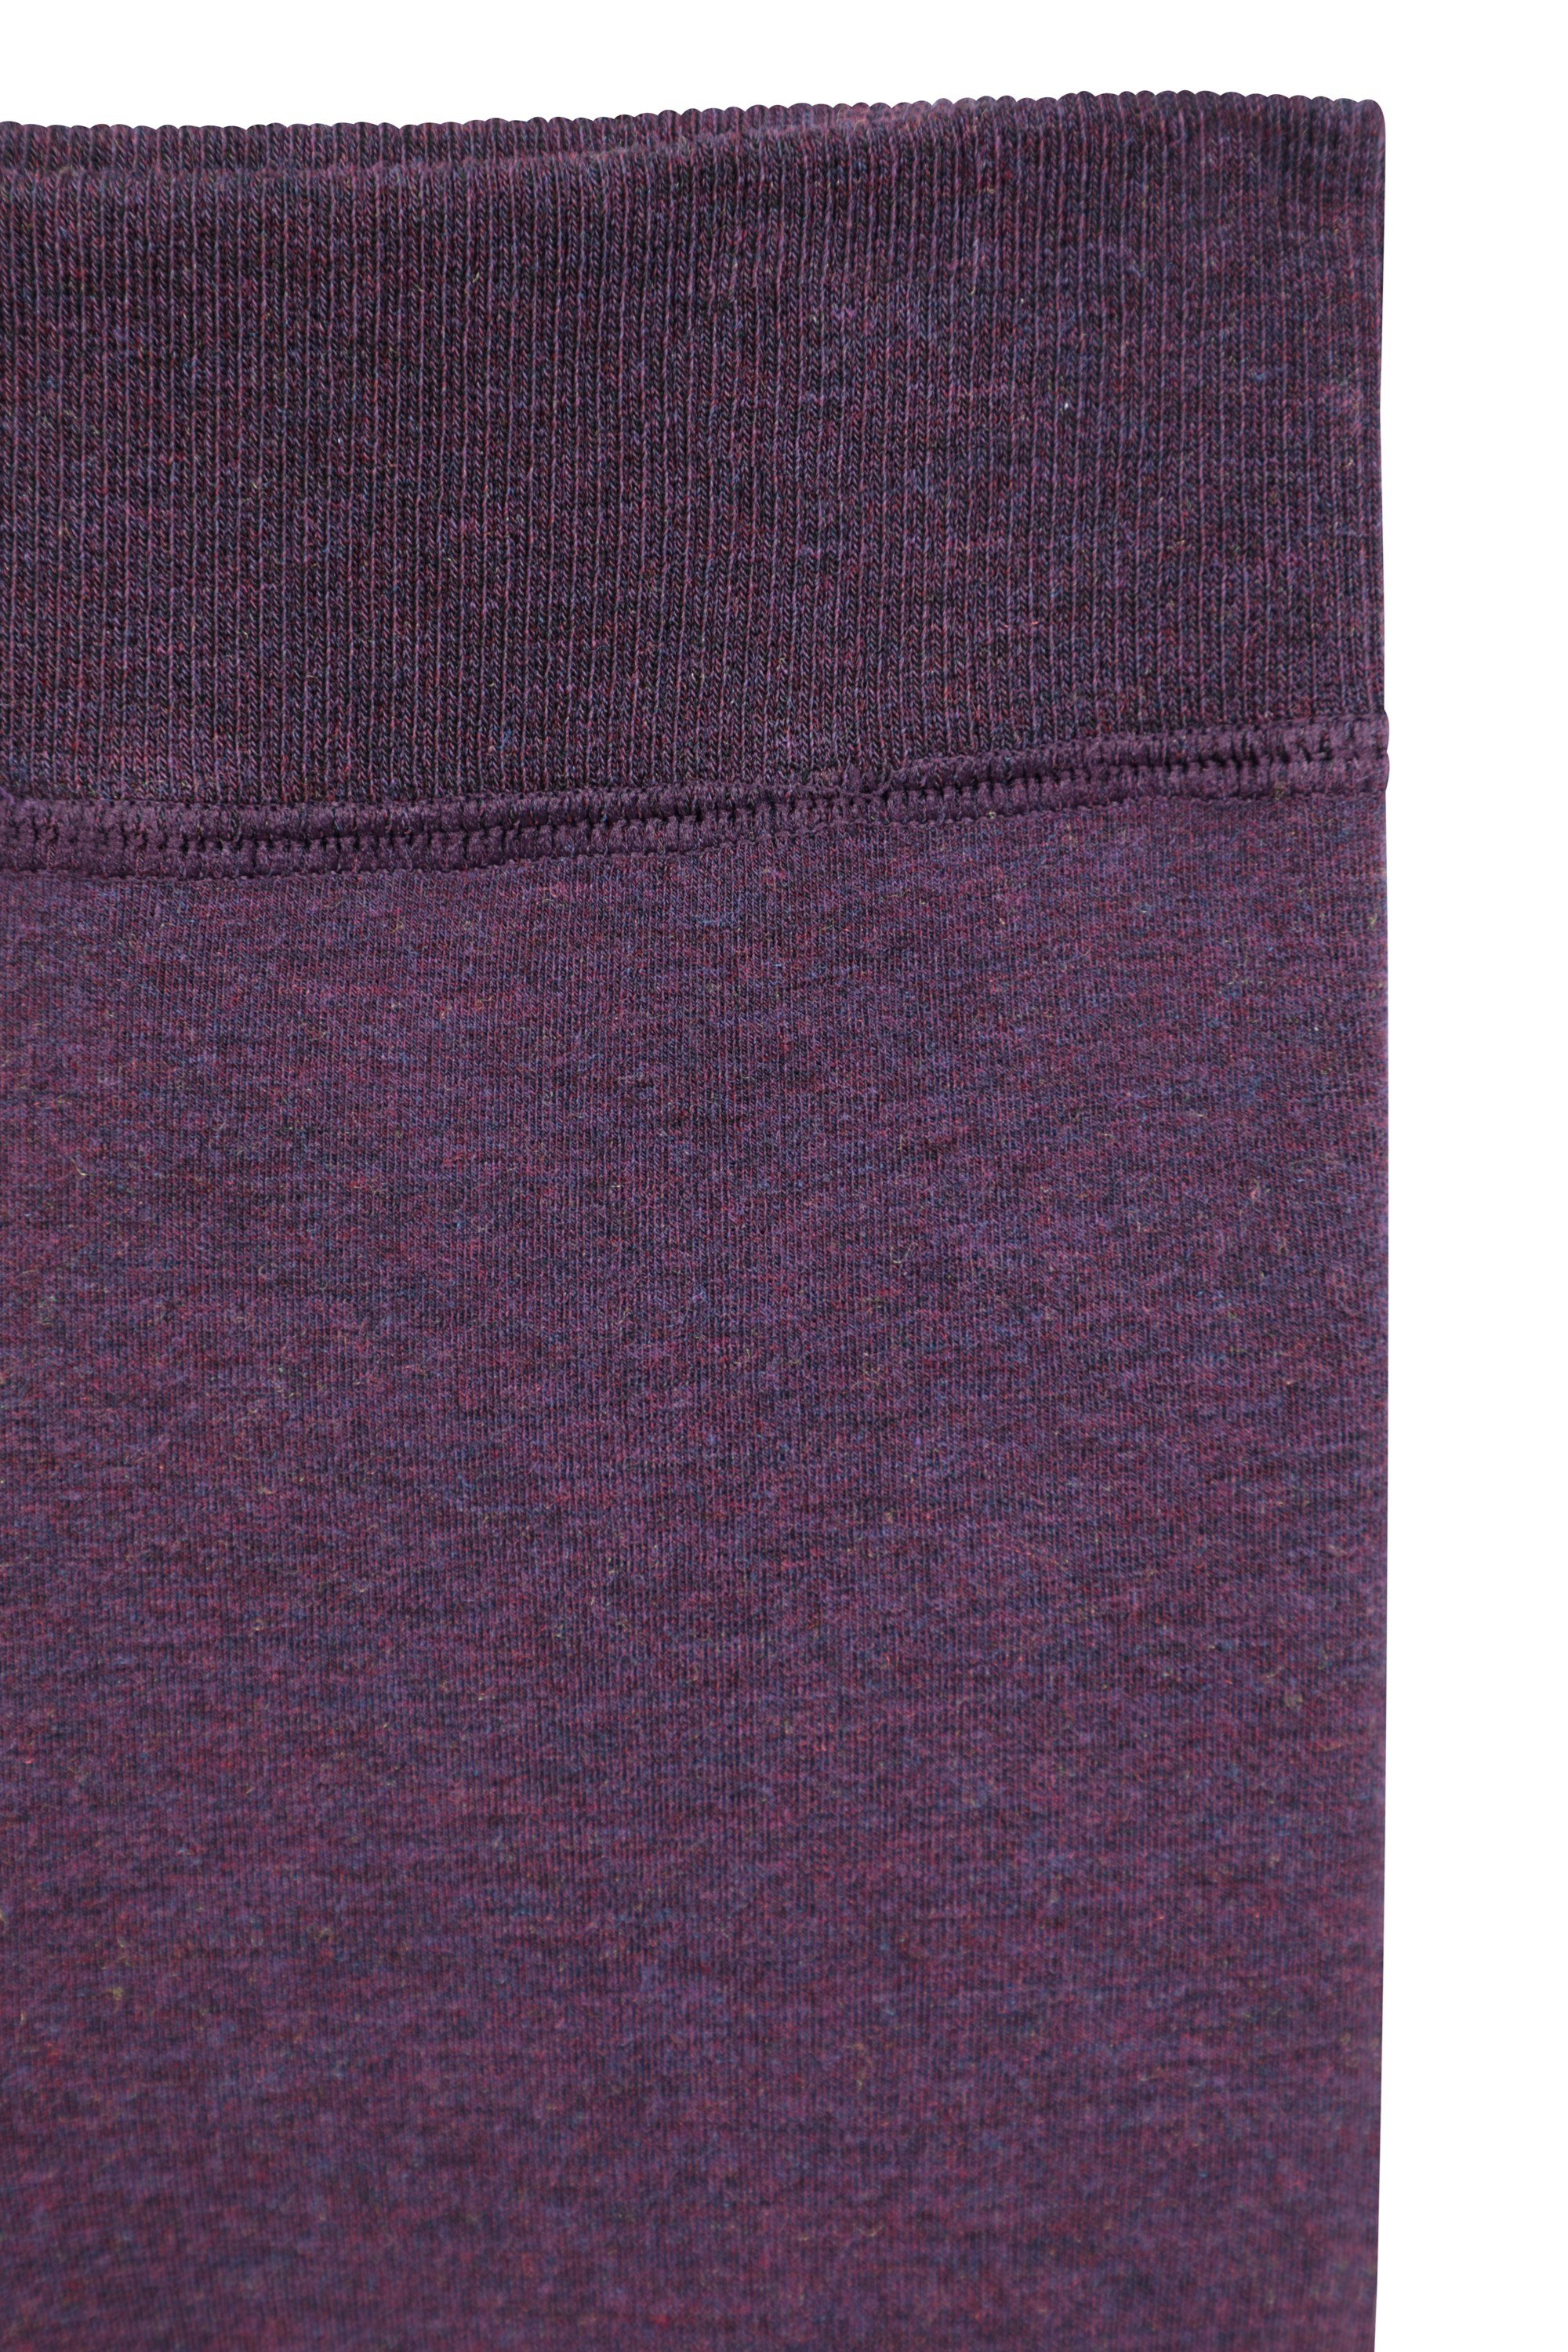 Buy Mountain Warehouse Purple Kids Fleece Lined Thermal Leggings